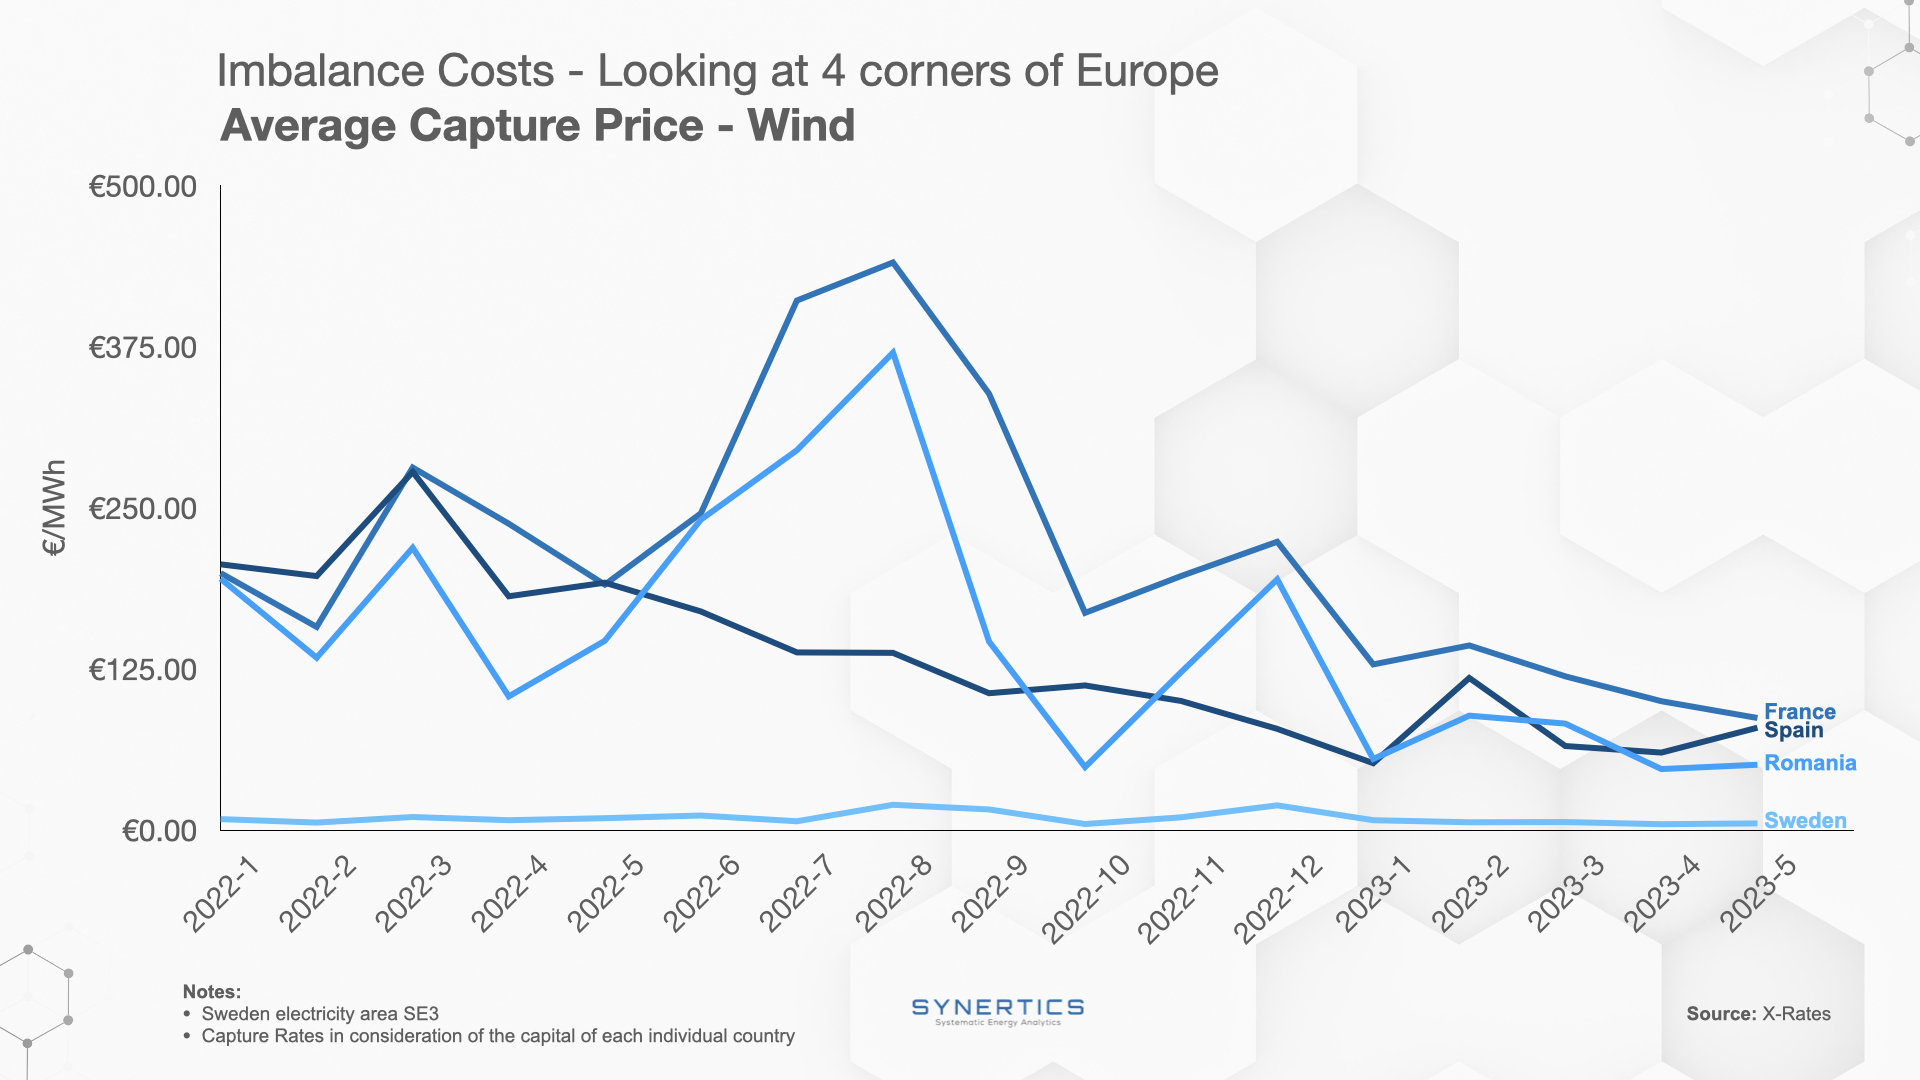 Imbalance Costs Europe - Average Capture Price - Wind